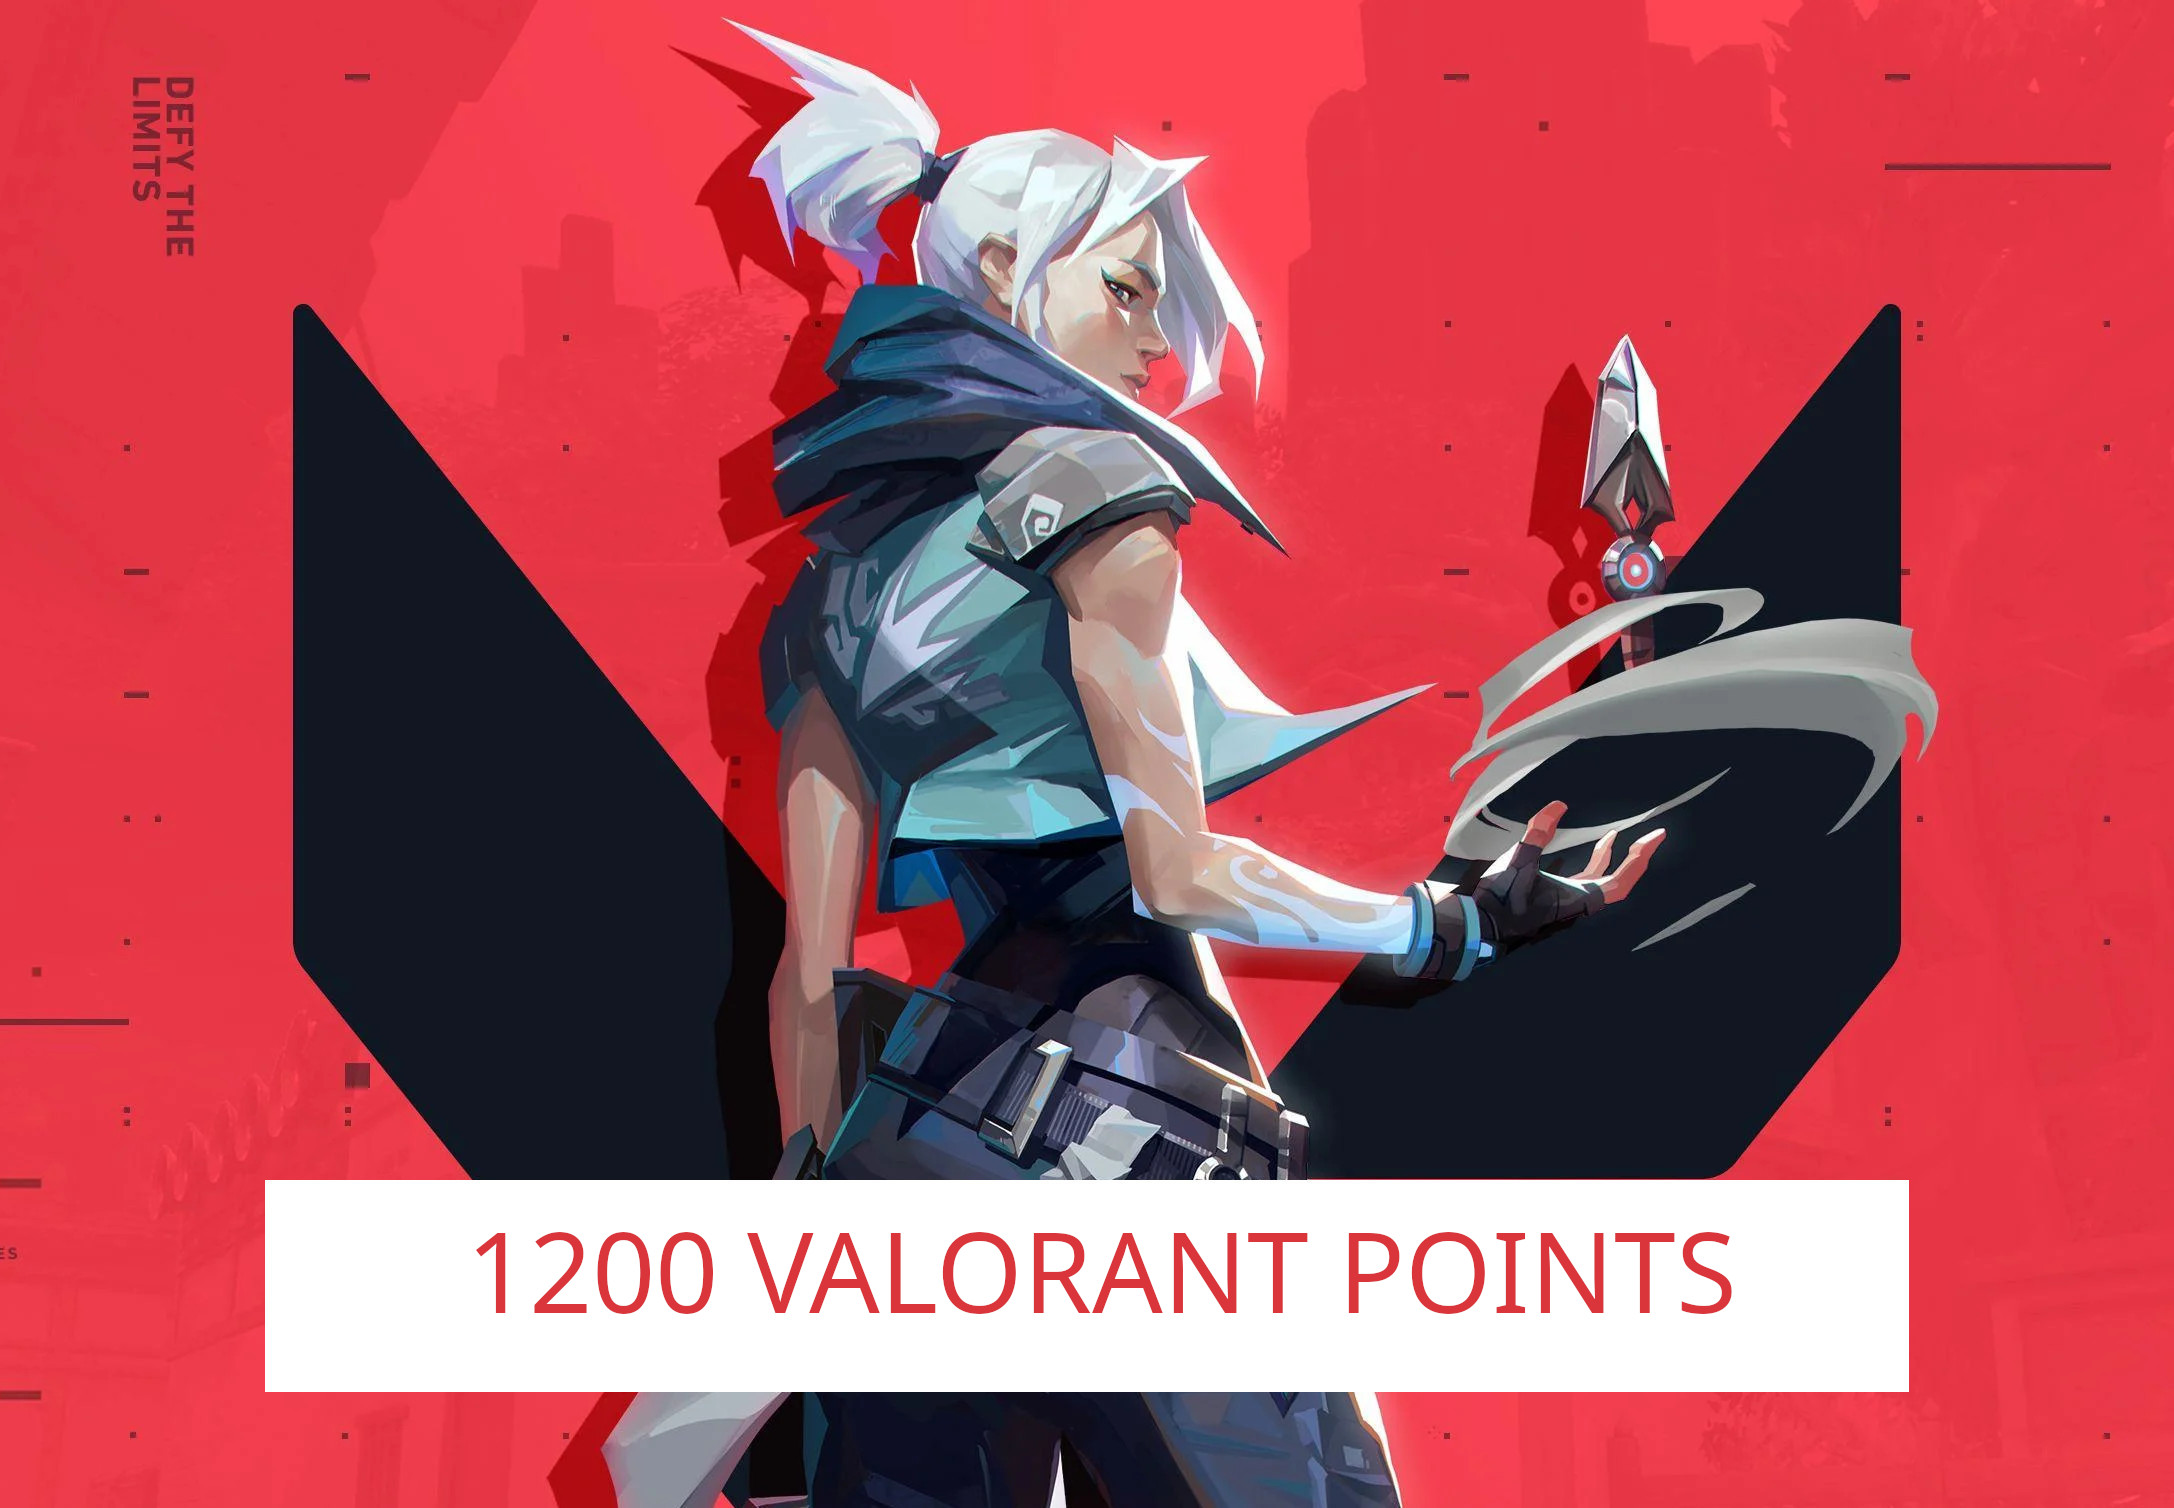 [$ 8.36] VALORANT - 1200 Valorant Points Gift Card TR